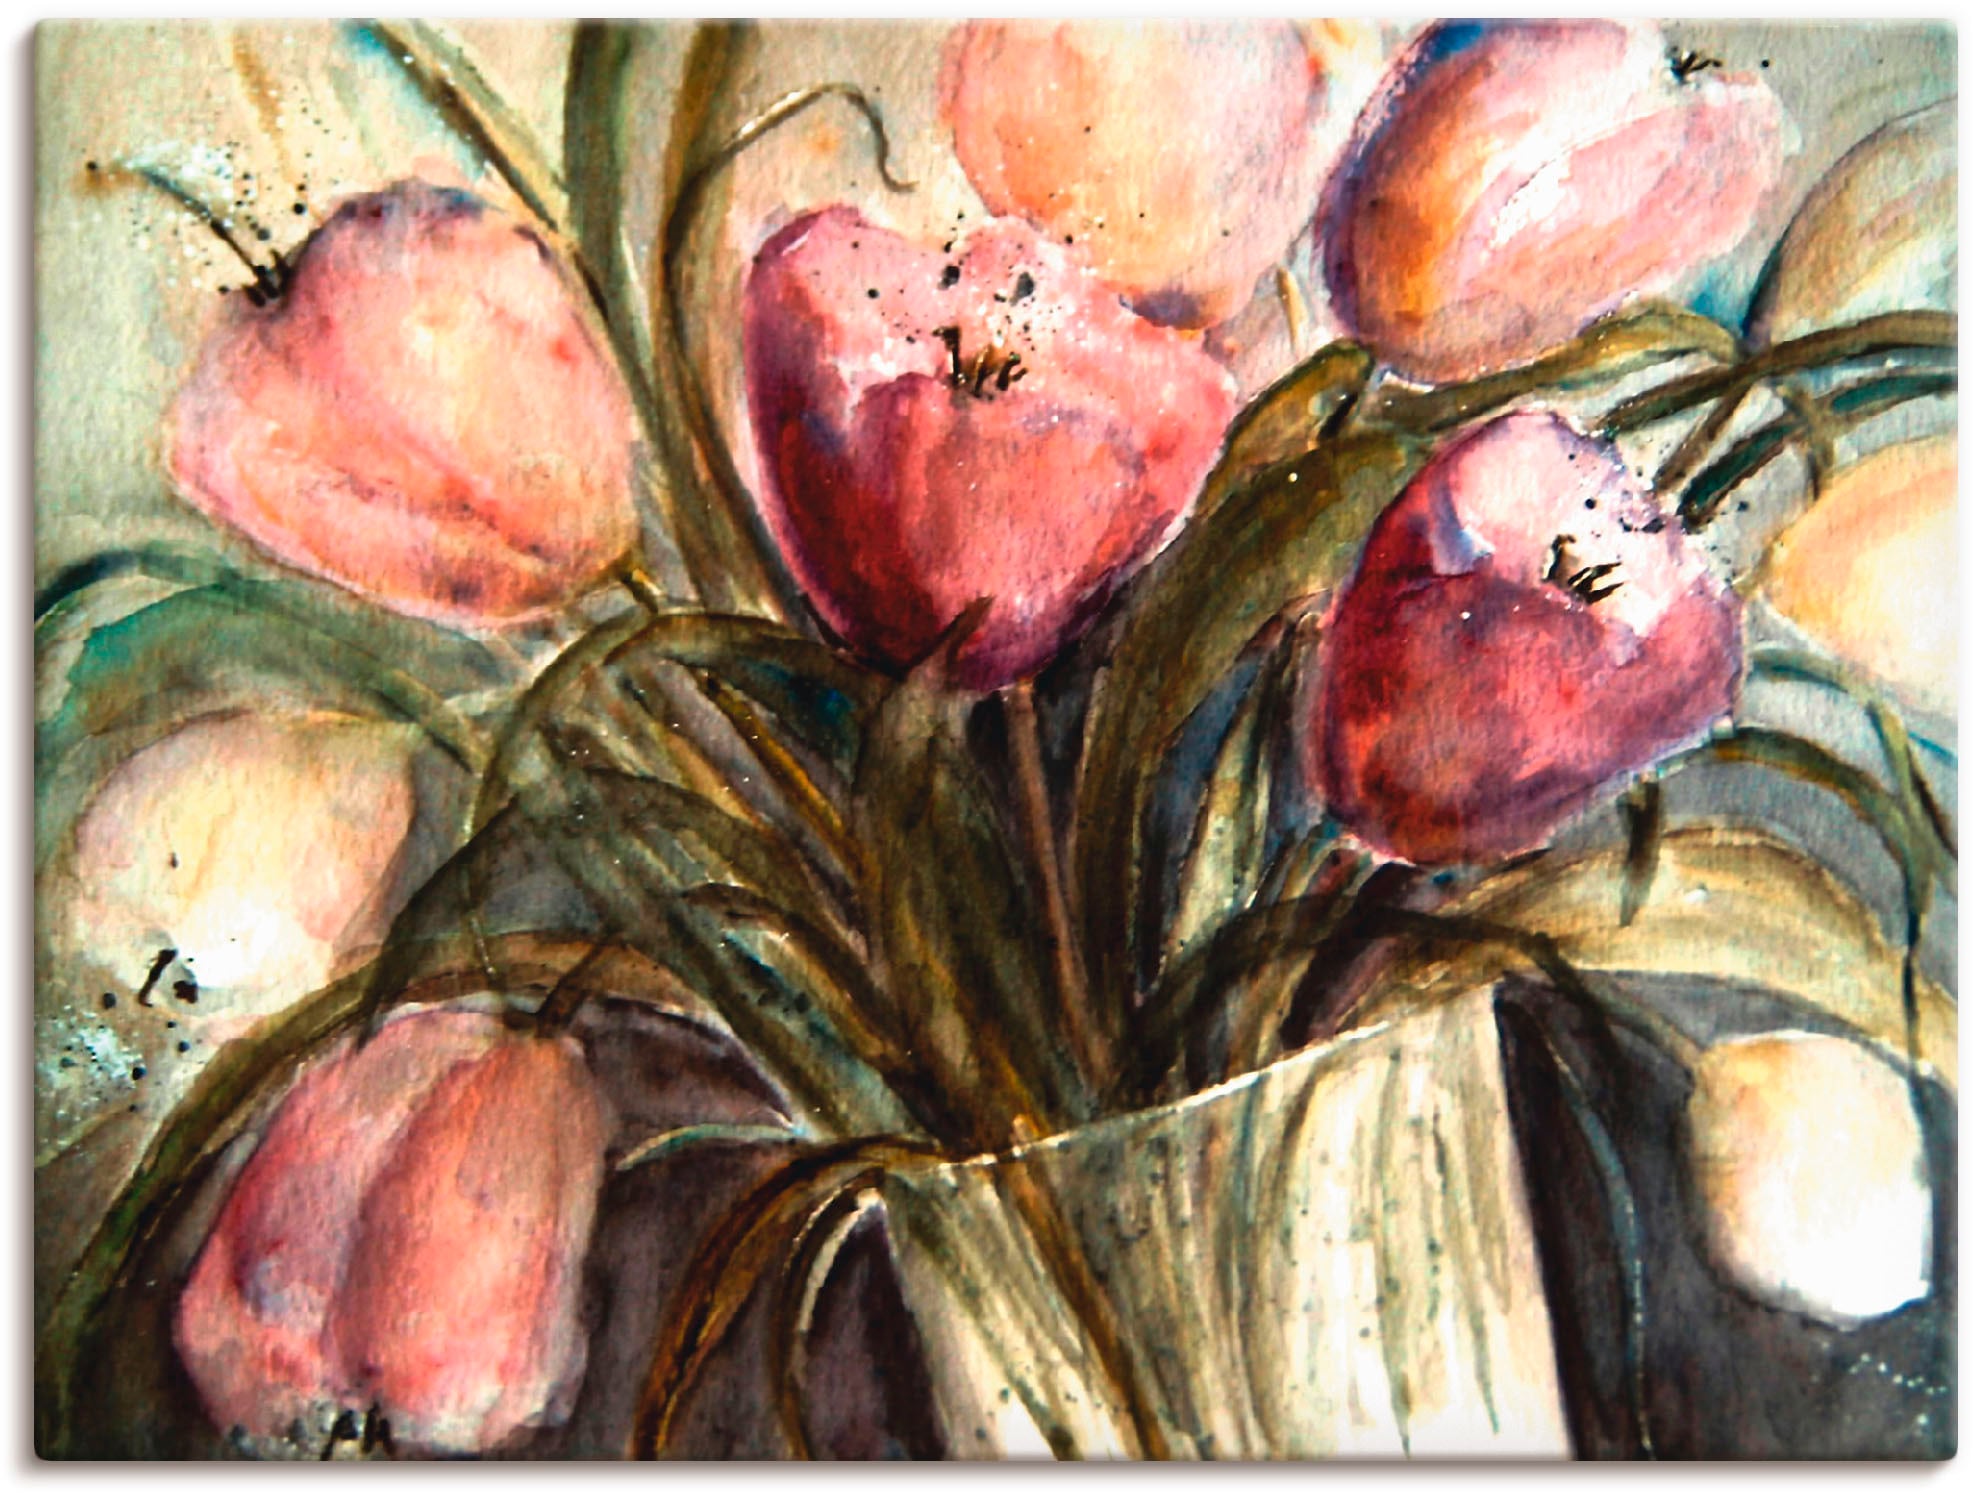 Artland Paveikslas »Lila Tulpen in Vase« Blume...